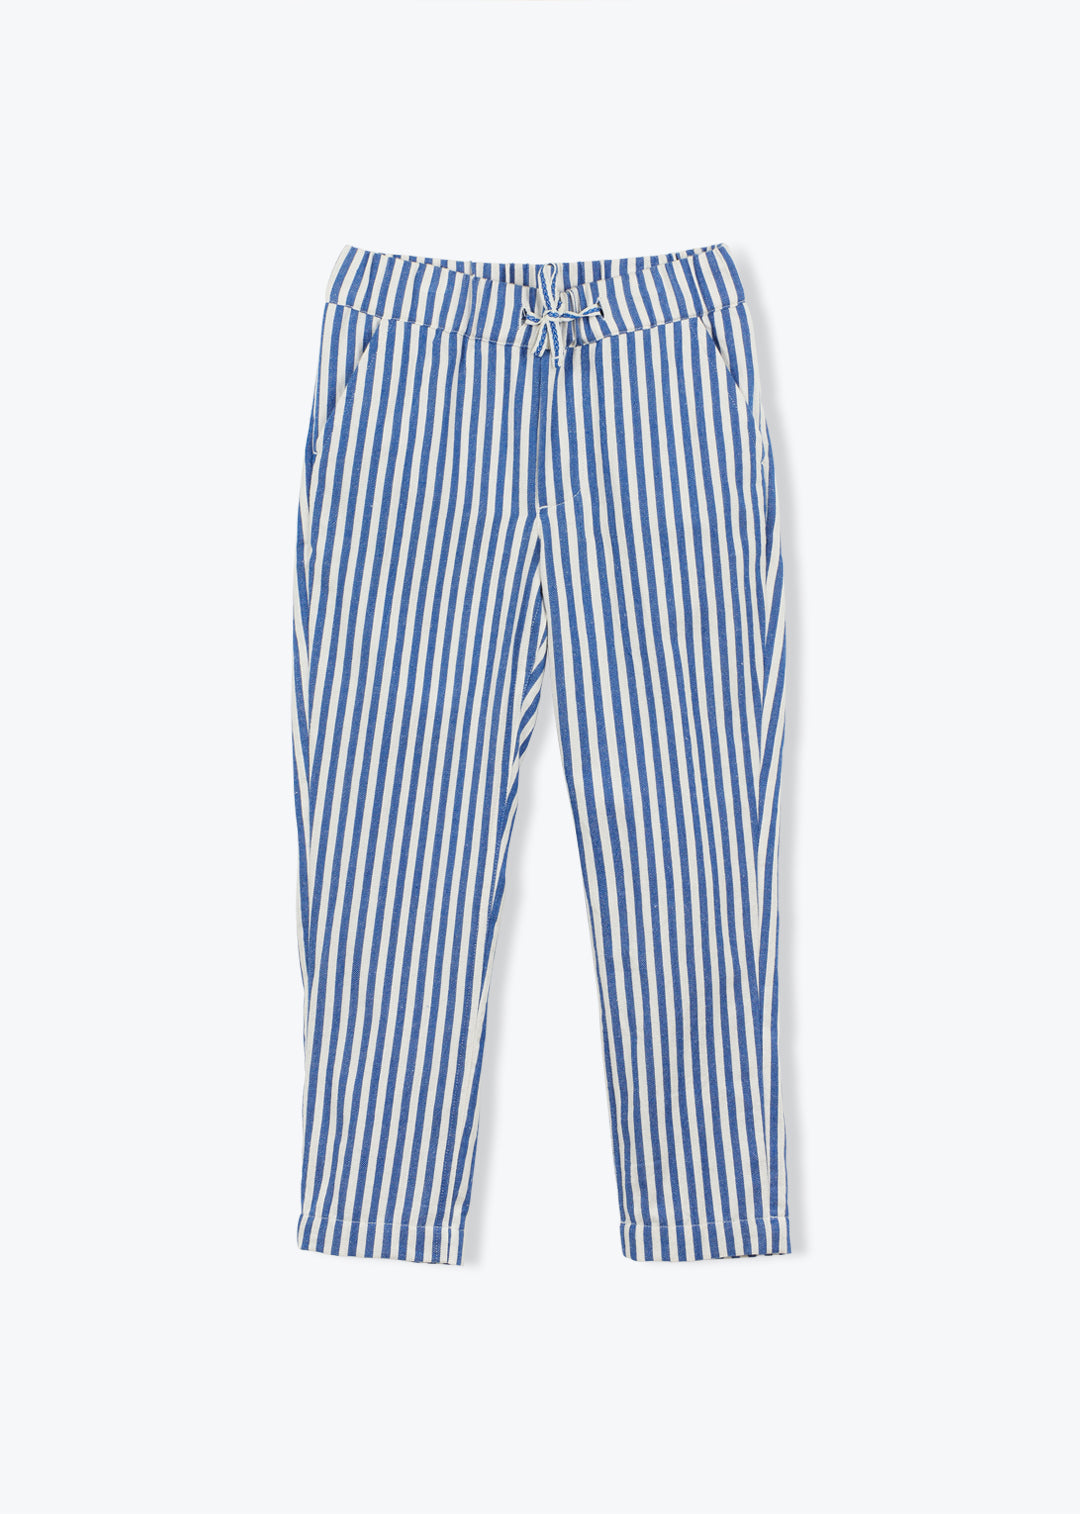 Trousers Denim Stripe Navy Florio - جيبة